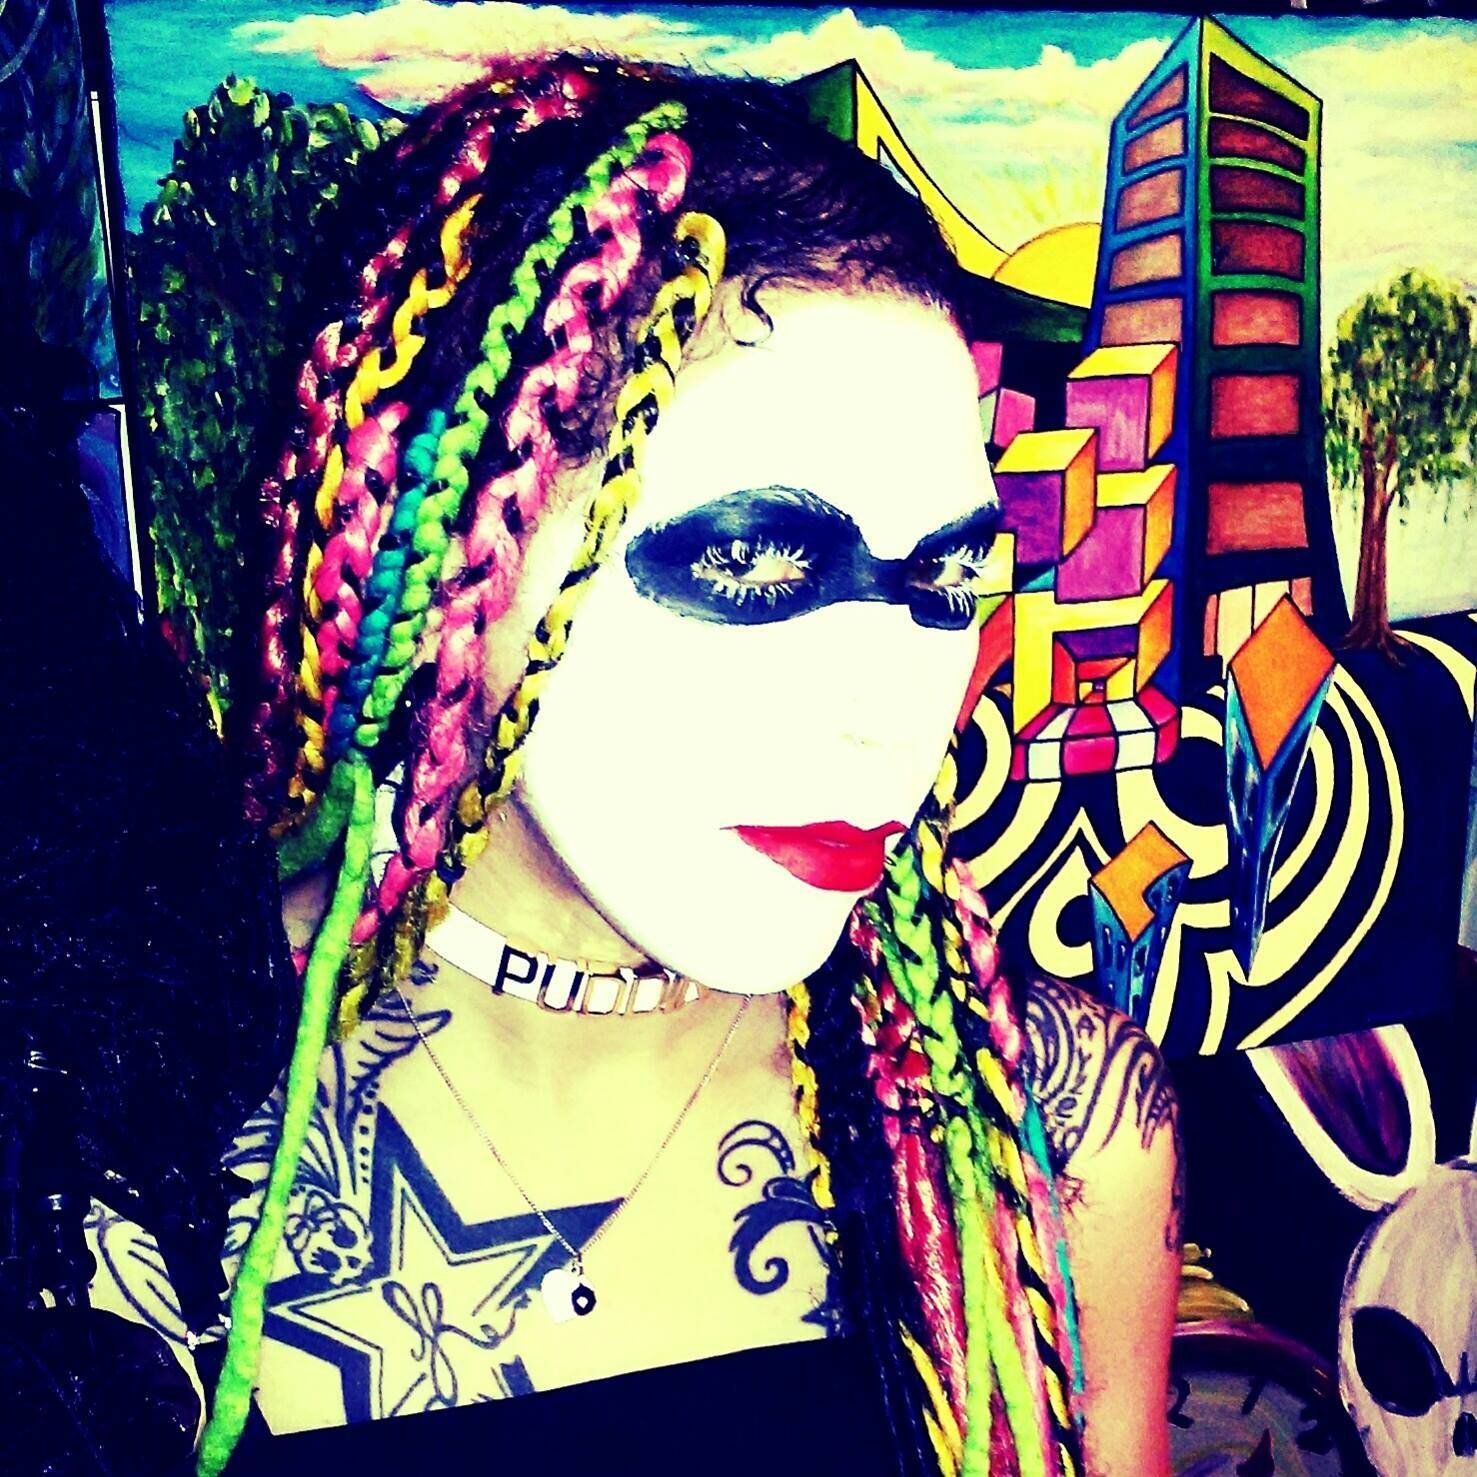 I am Fixuna. I am an Illustrator/Puzzle-maker and I do Performance Art as Fixuna the Clown. 
Sleepwalker..